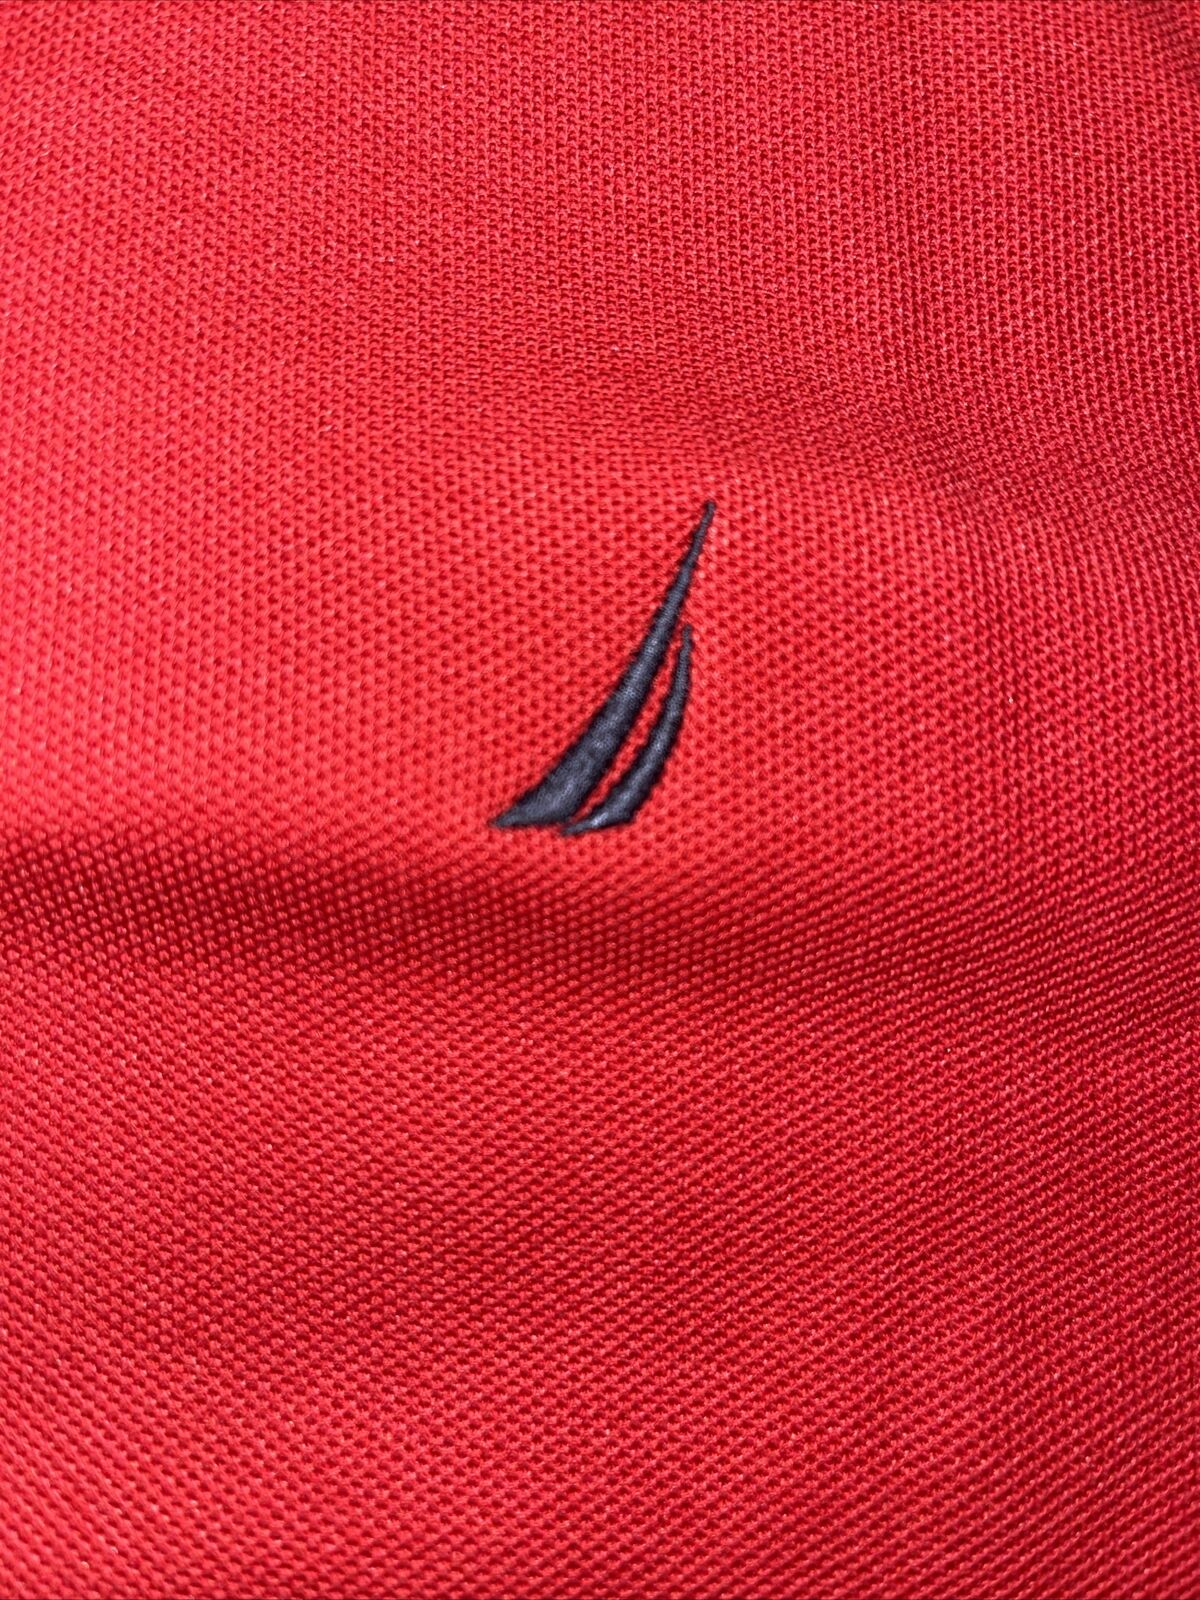 Nautica Performance Deck Shirt Sz 2XL red used - image 7